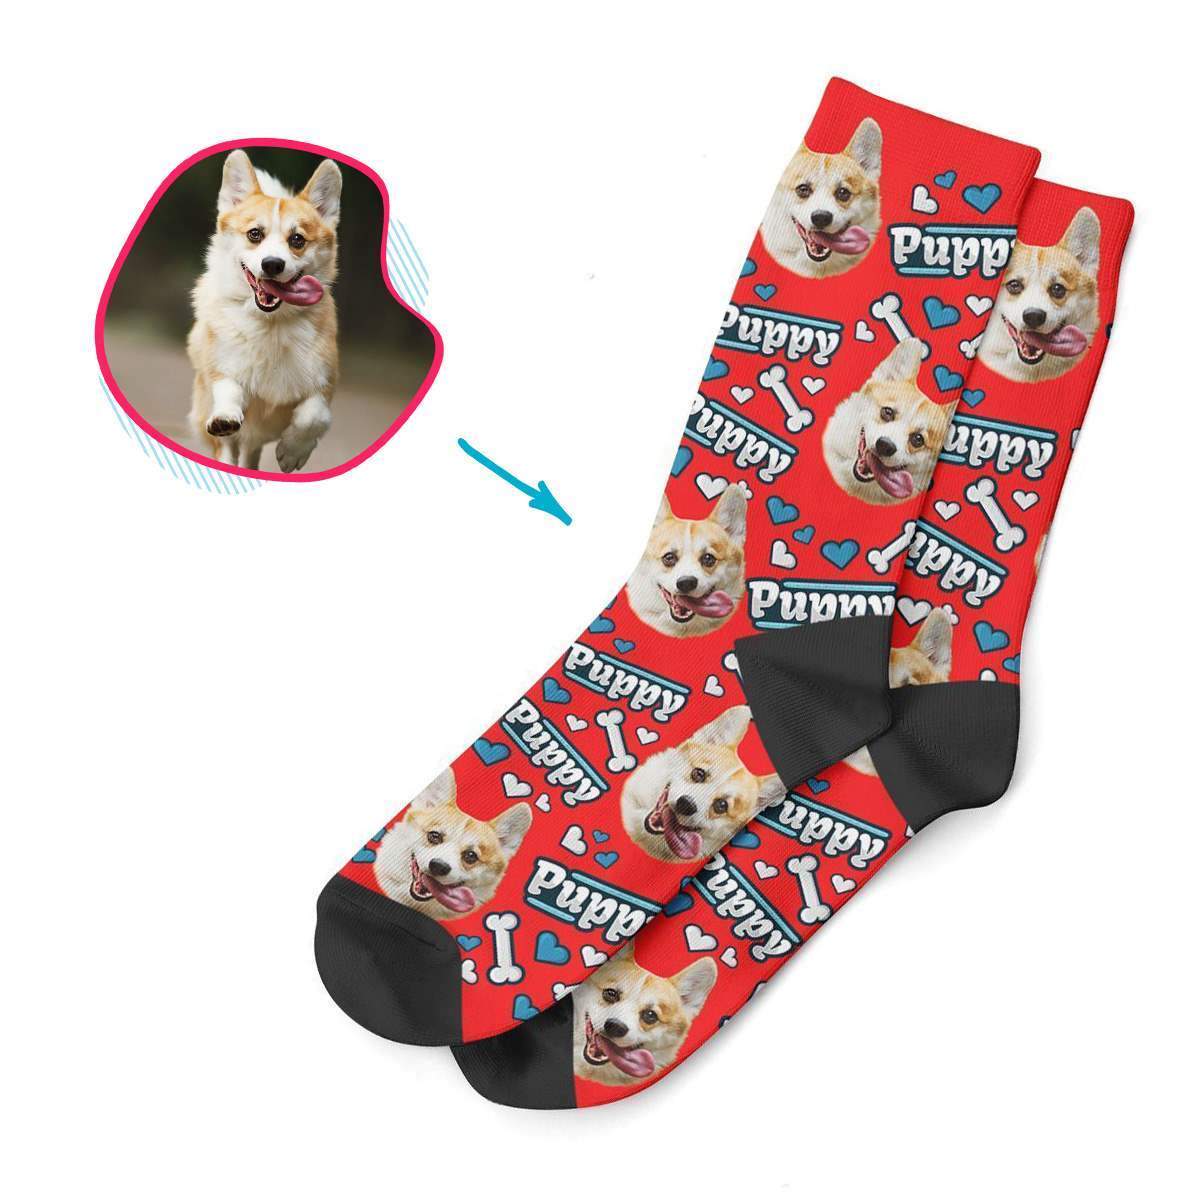 Puppy Personalized Socks